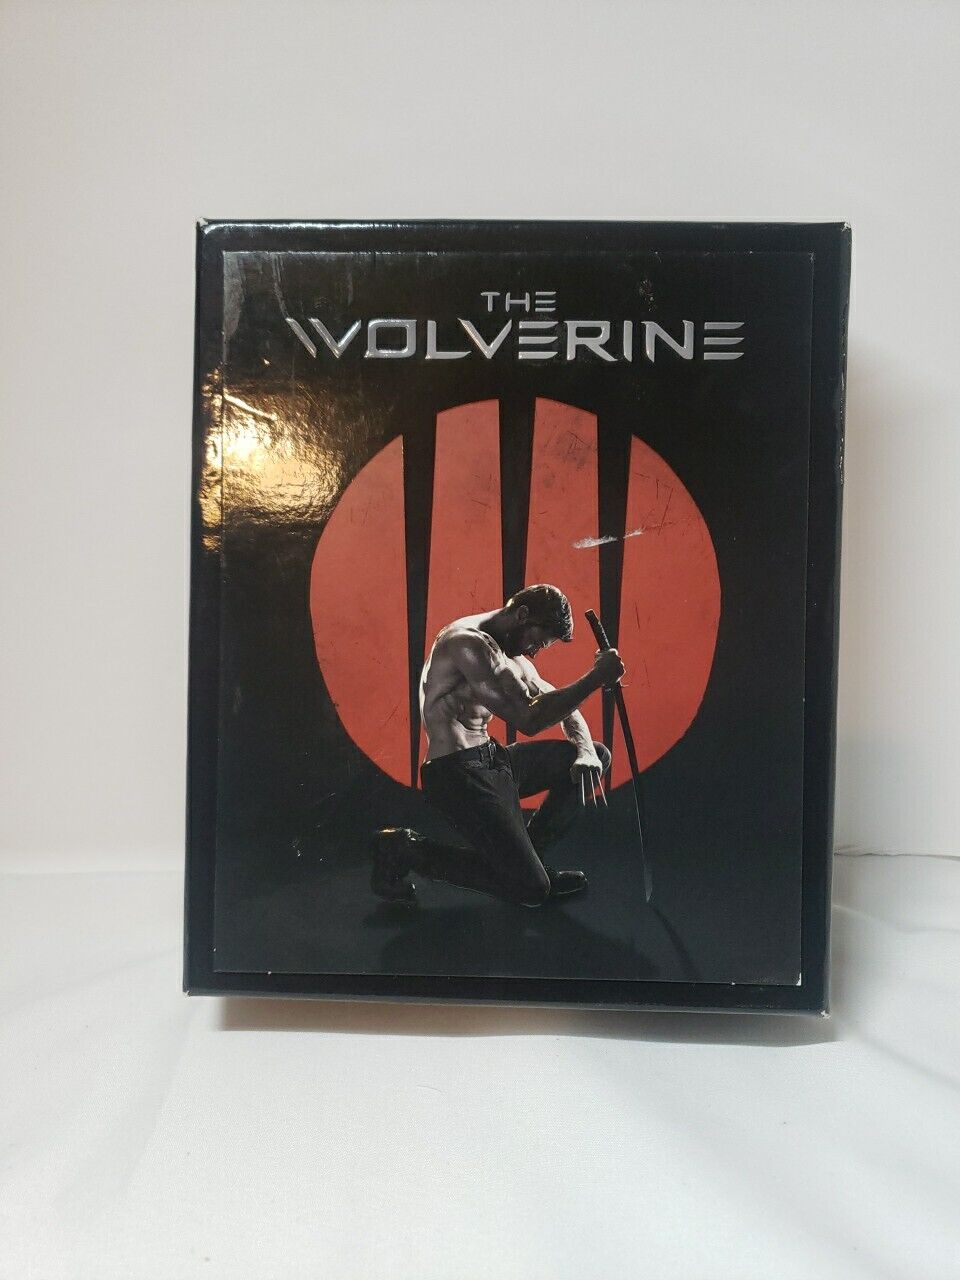 THE WOLVERINE Blu-Ray 3D Blu-Ray Blu-Ray Extended Cut DVD Box comic book w Exclu